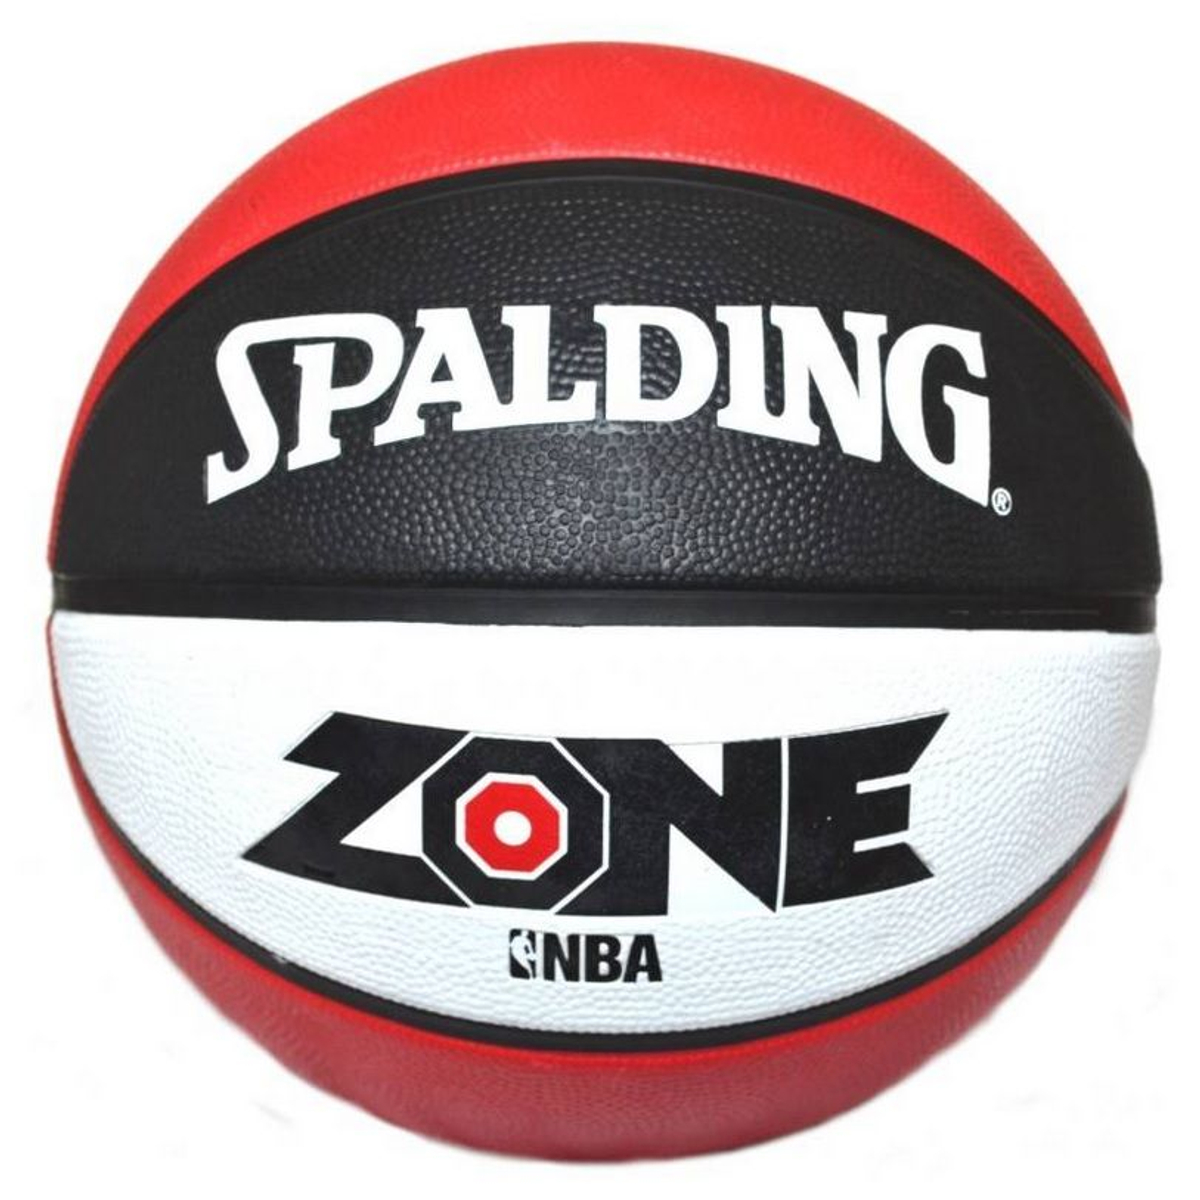 Spalding Zone Basketbal